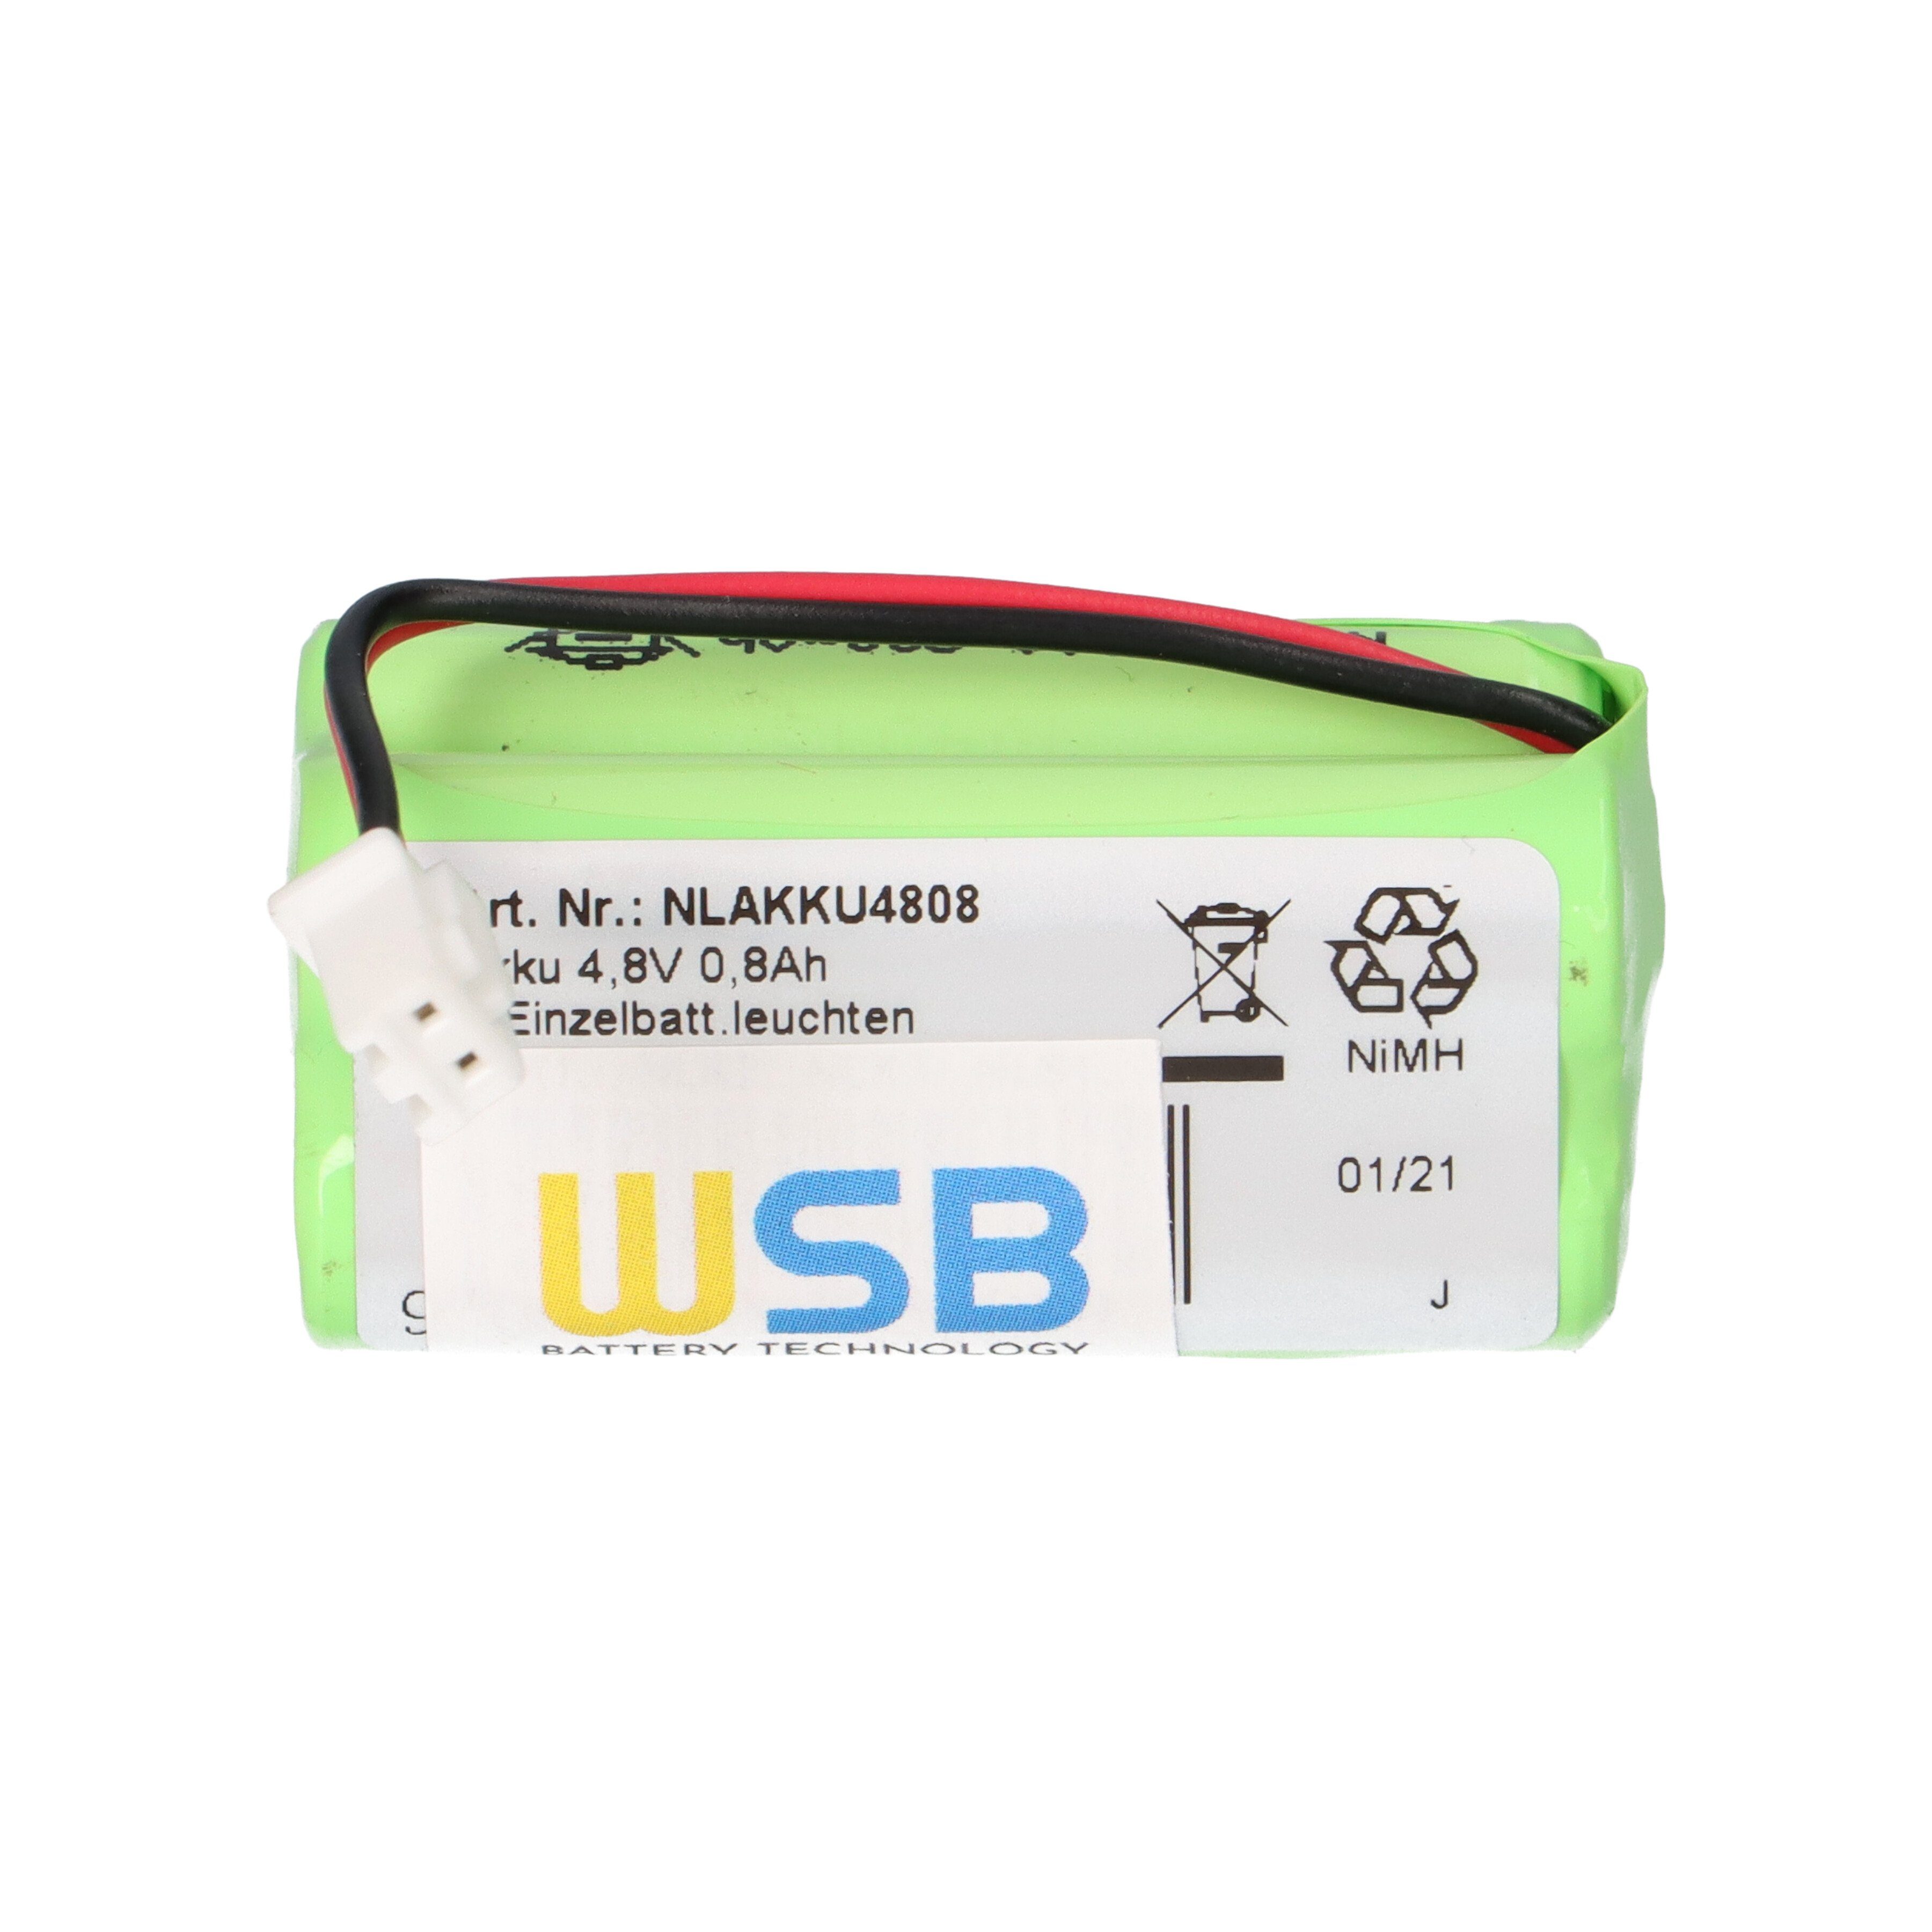 4,8V Notleuchten Battery GmbH 800mAh Stecker Ni-MH Akku F2x2 WSB Technlology Kabel Akkupack AAA und